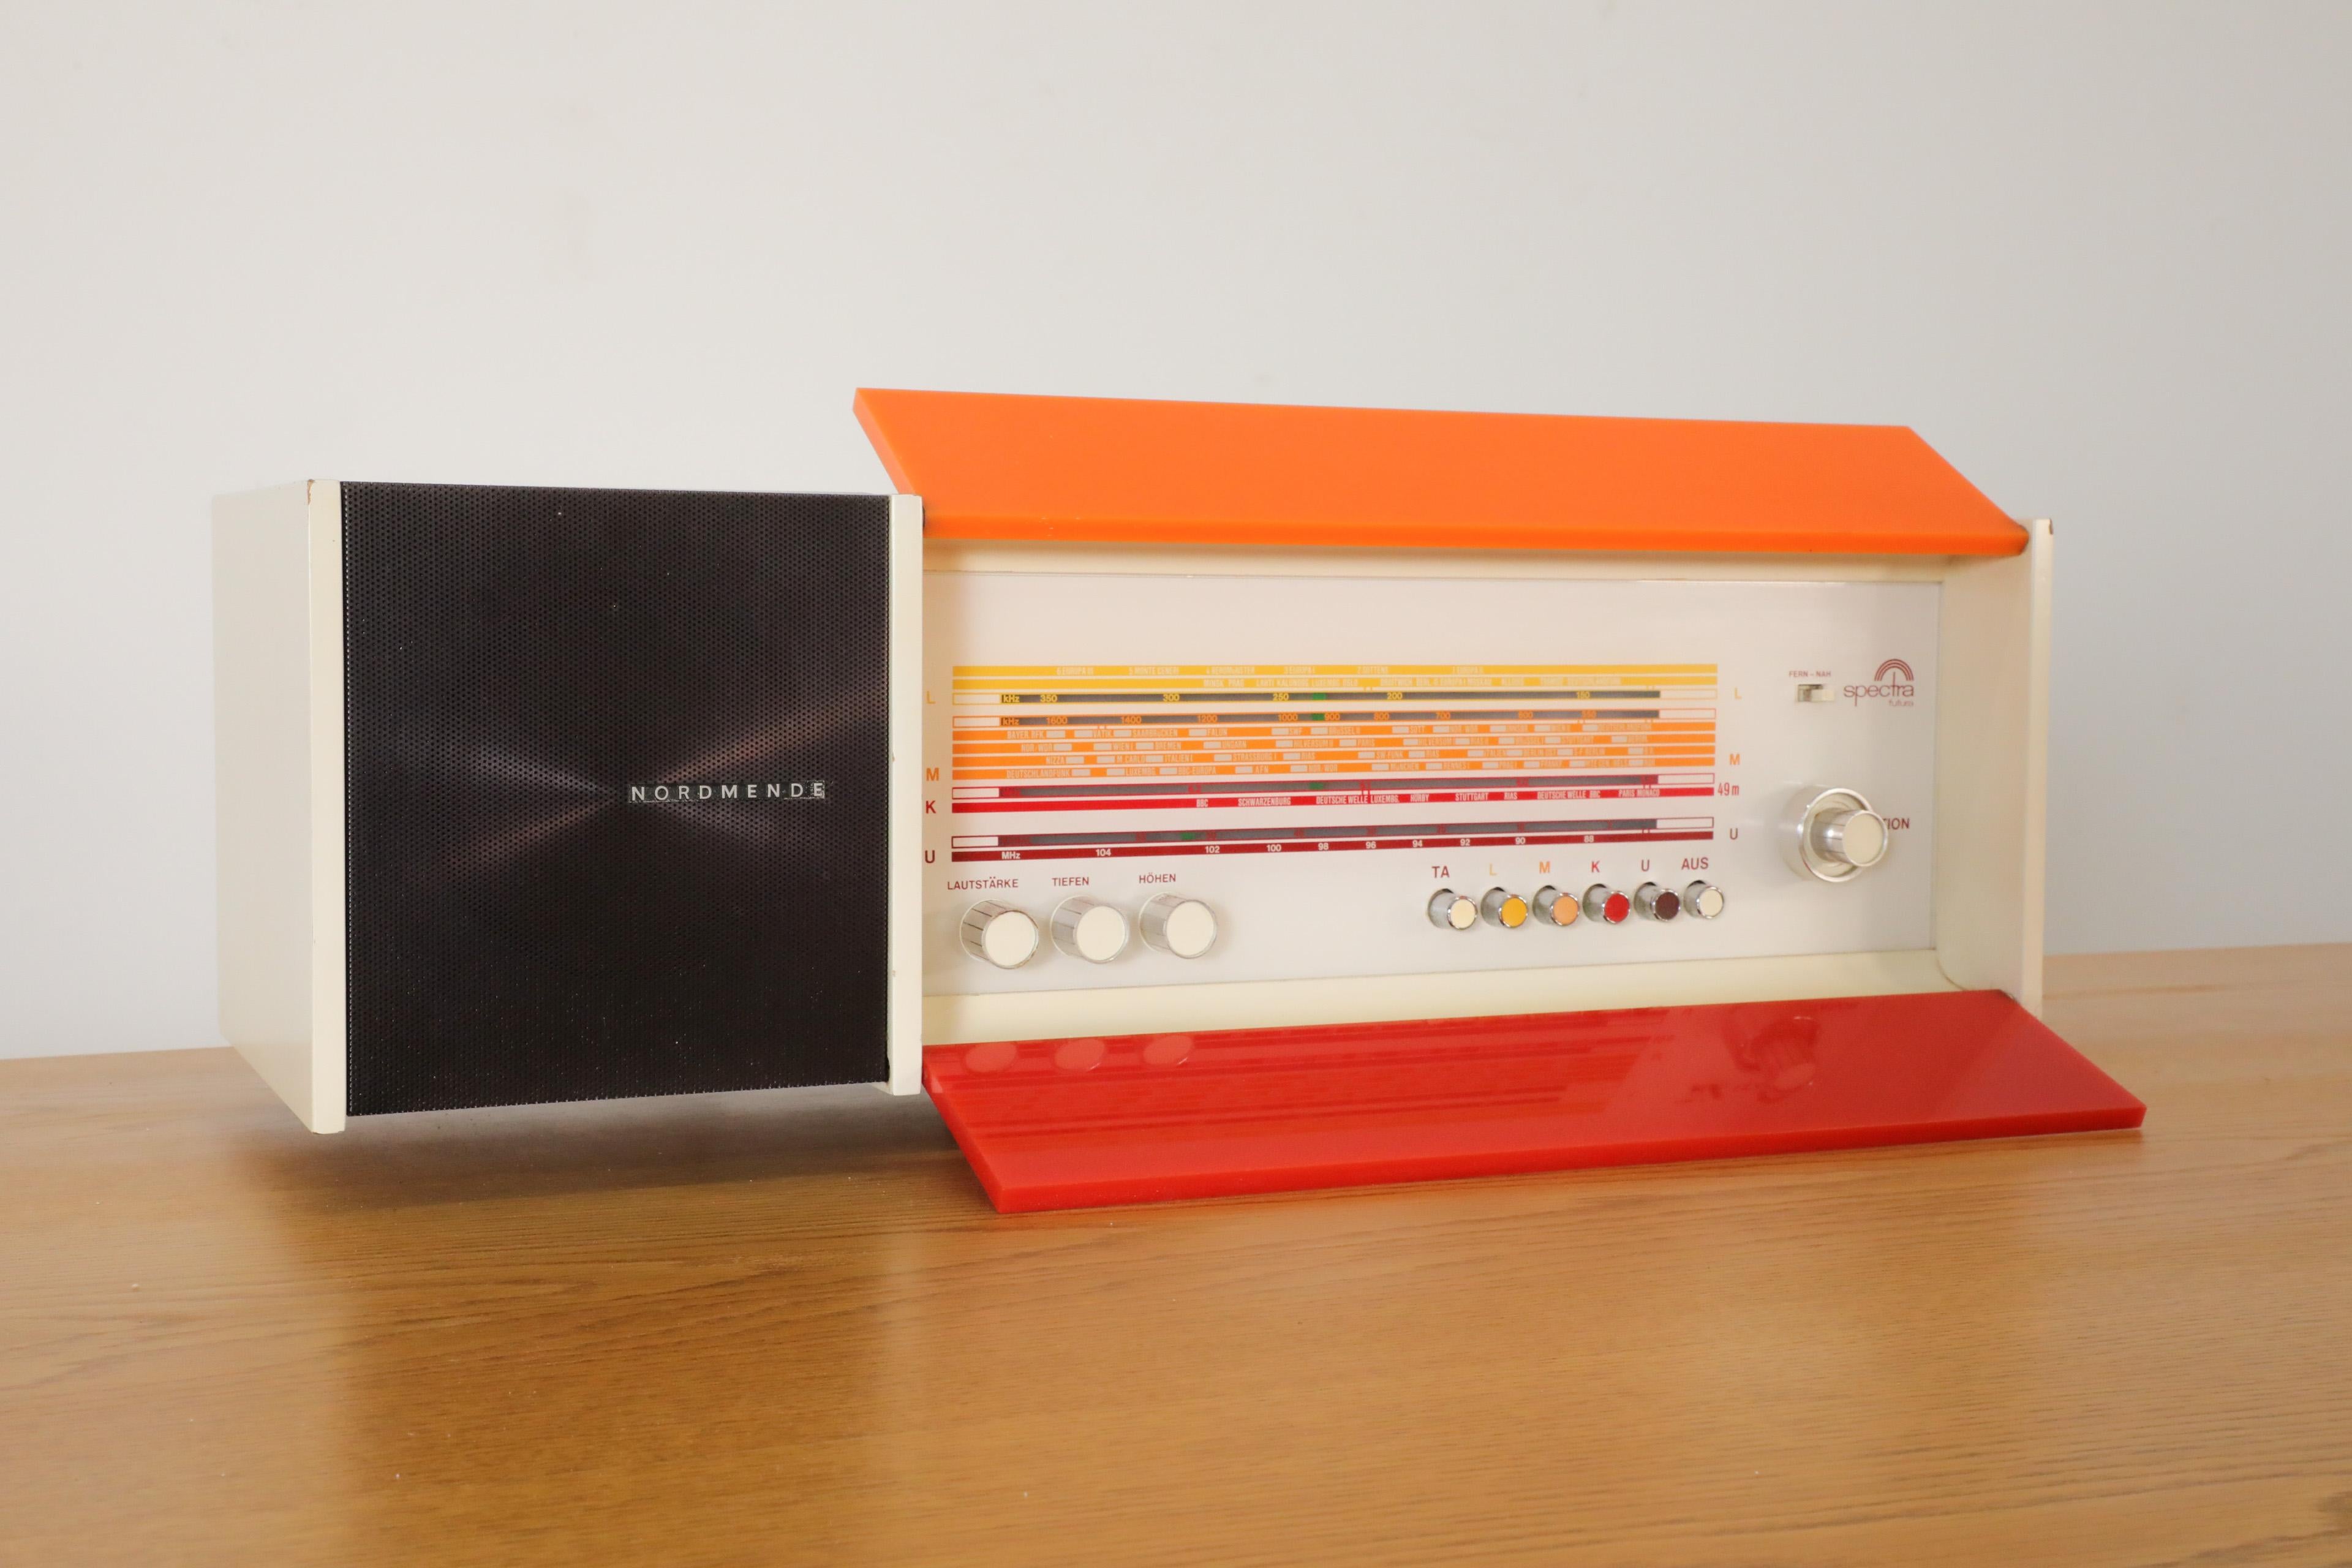 Raymond Loewy entworfenes Nordmende Spectra Futura Transistor Radio in Rot & Orange im Angebot 1